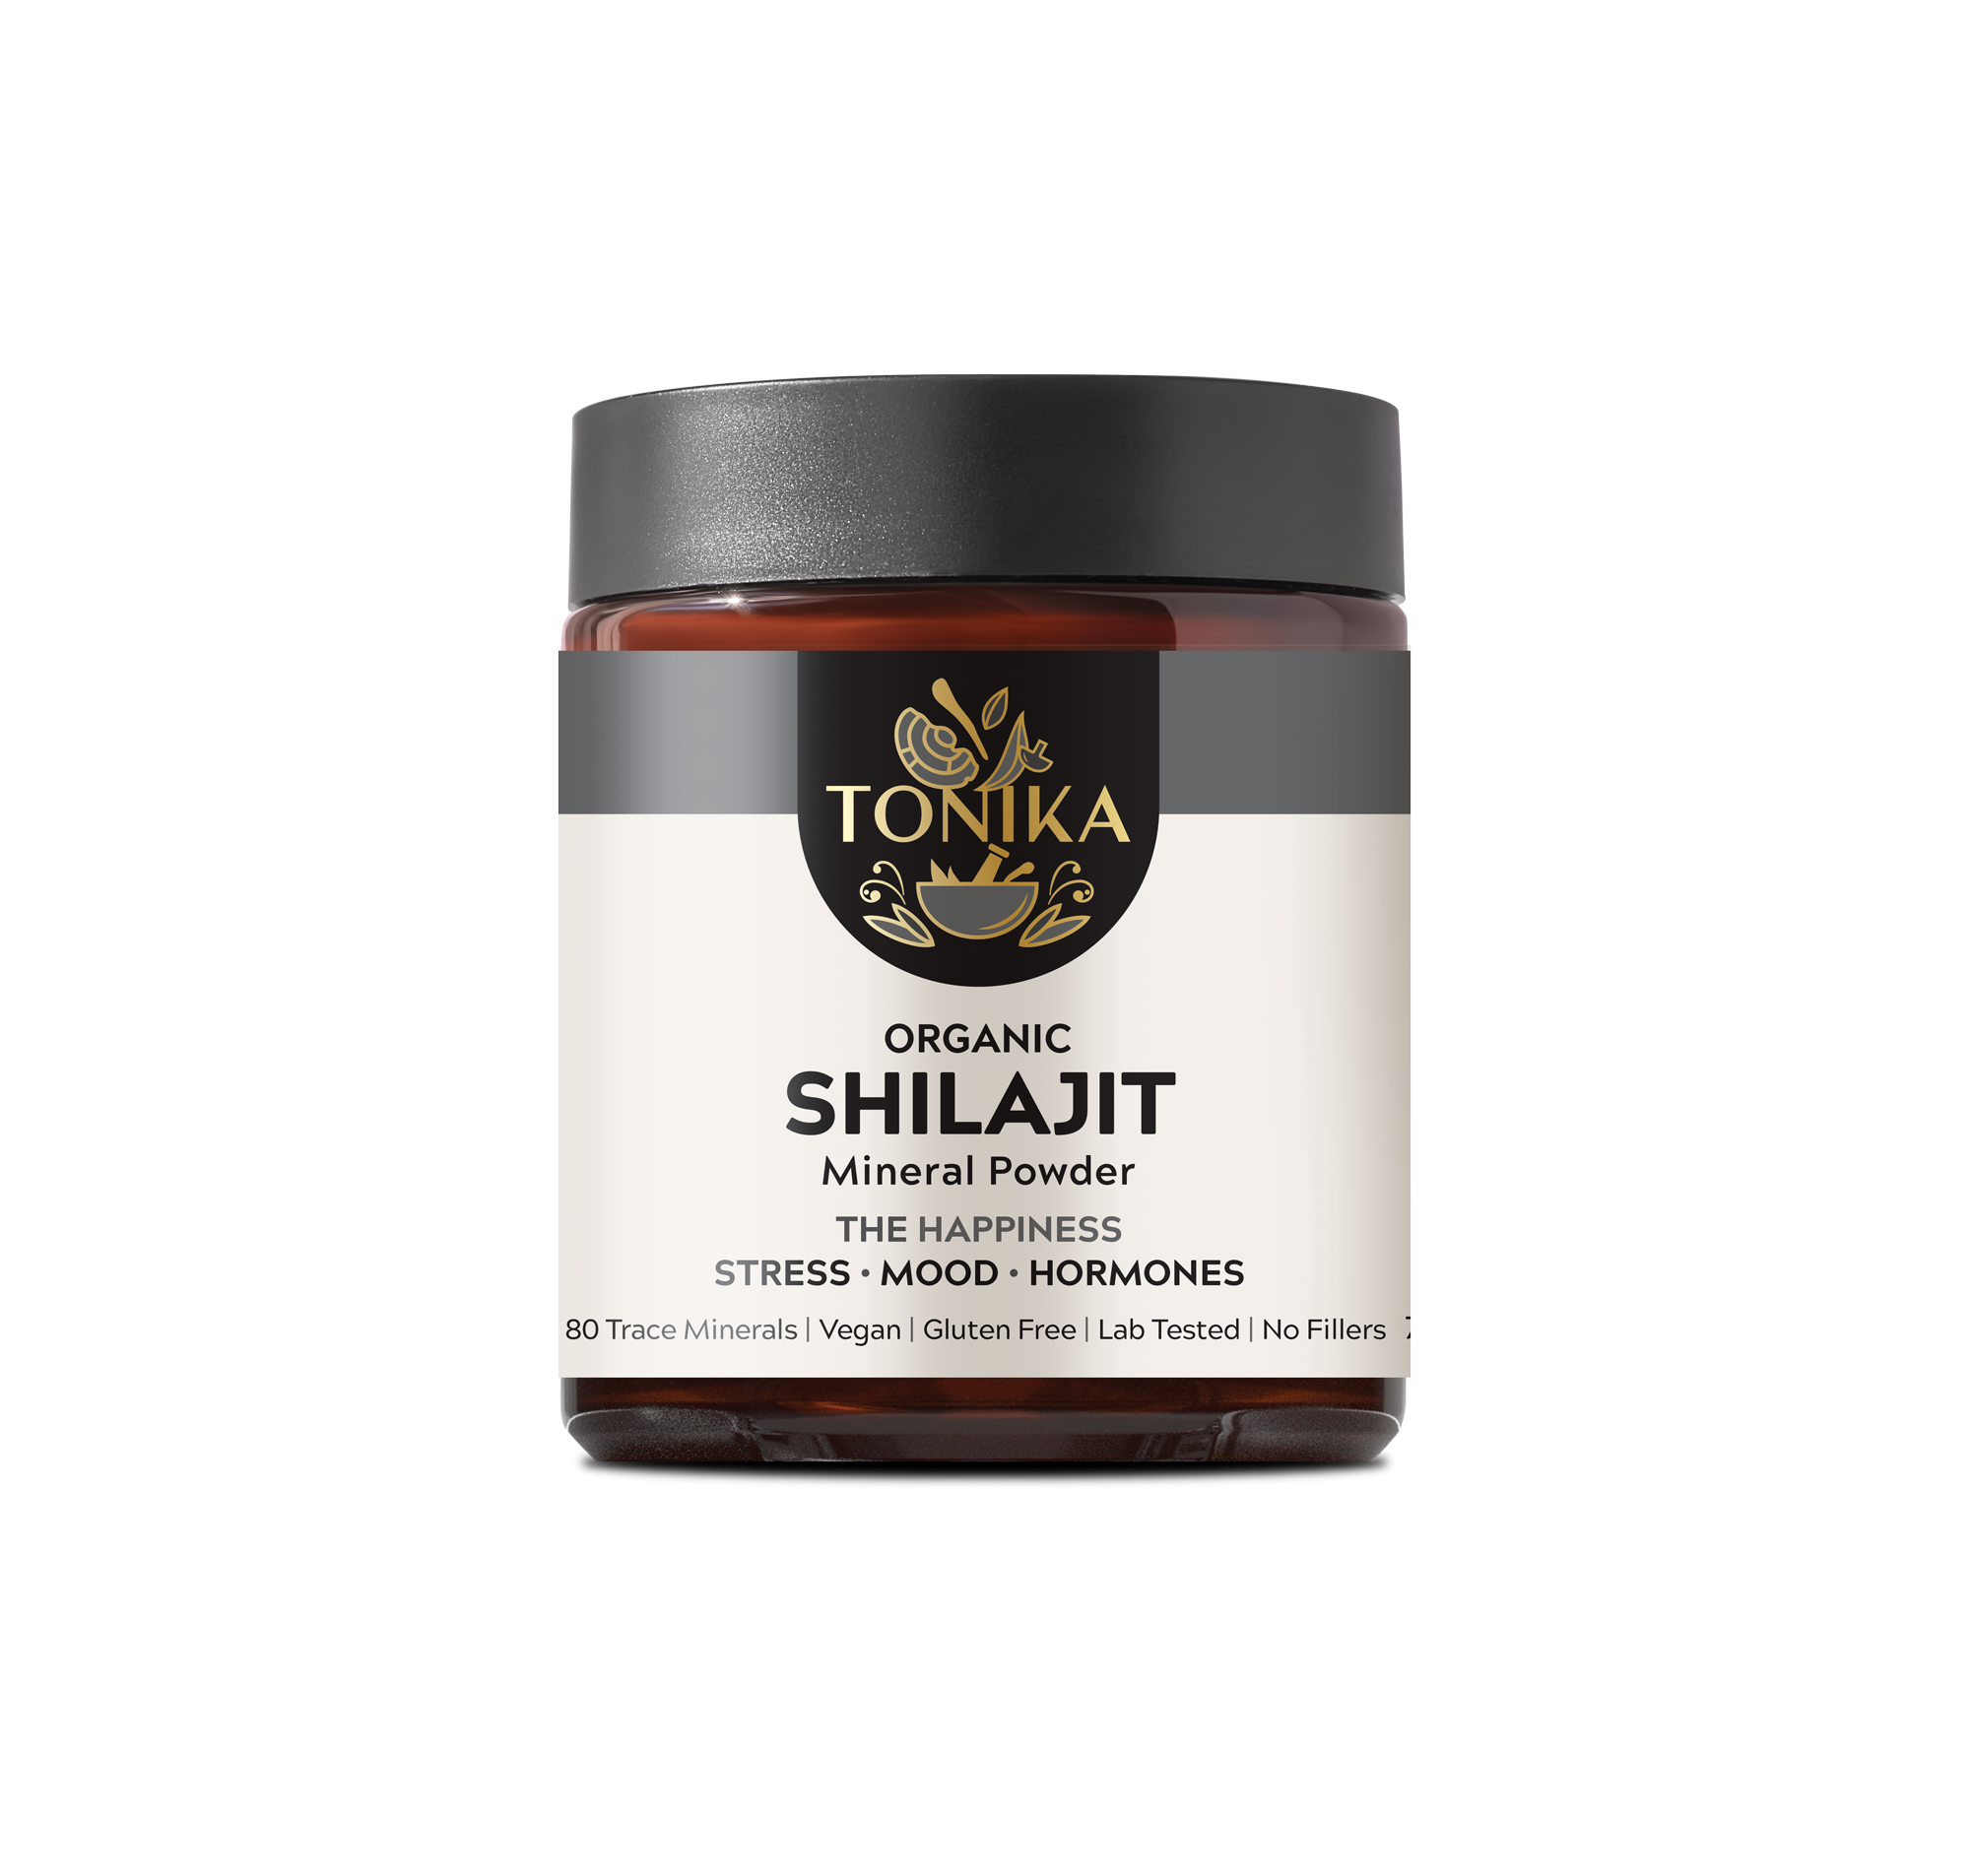 Organic Shilajit Mineral Powder - THE HAPPINESS